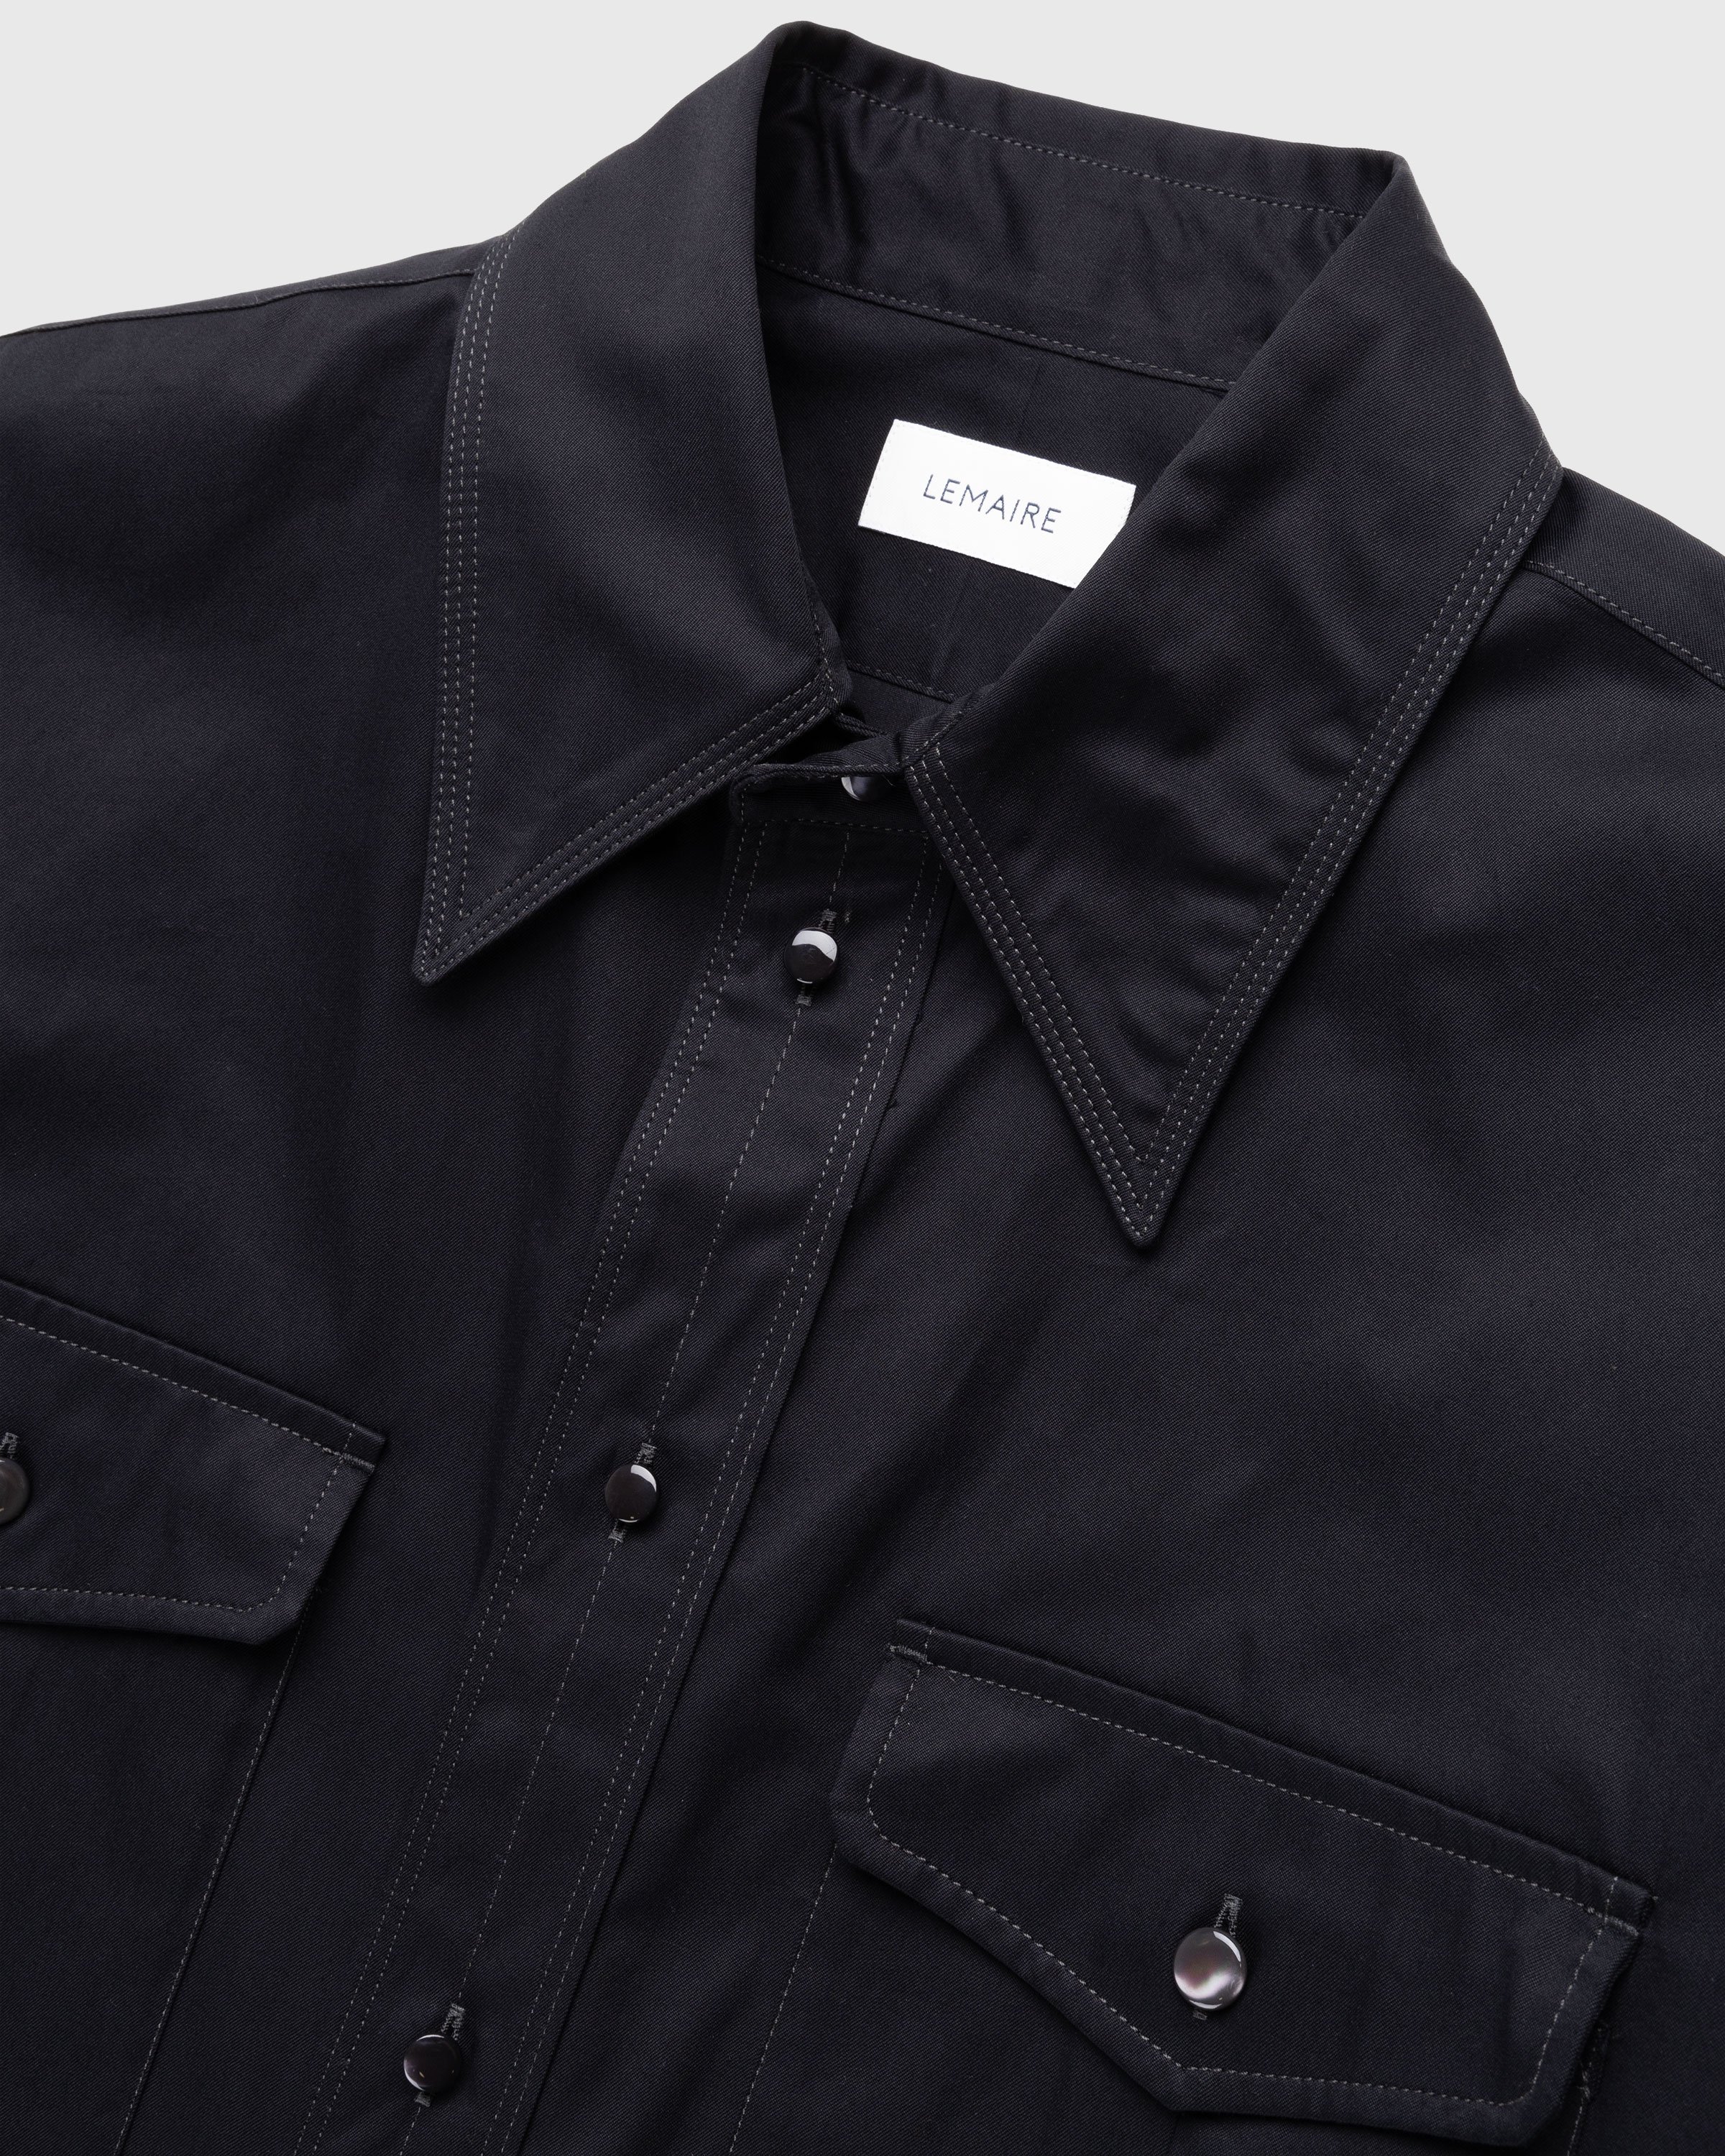 Lemaire - Relaxed Western Shirt Black - Clothing - Black - Image 5